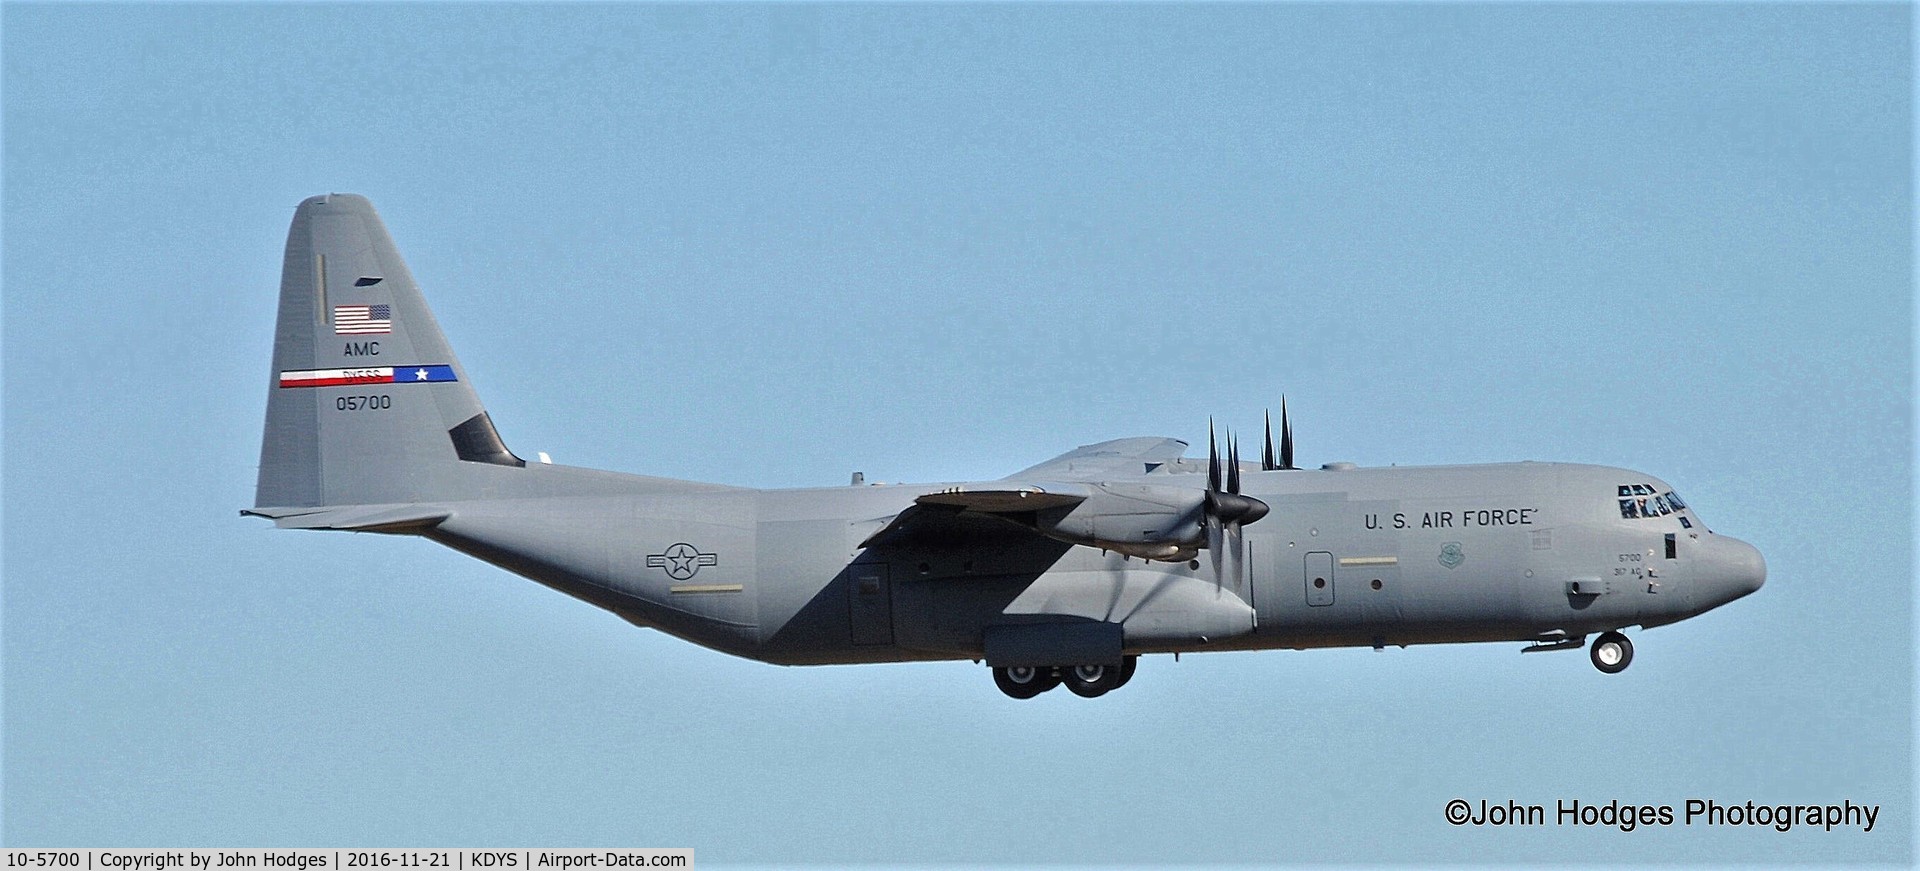 10-5700, 2010 Lockheed Martin C-130J-30 Super Hercules C/N 382-5700, coming home